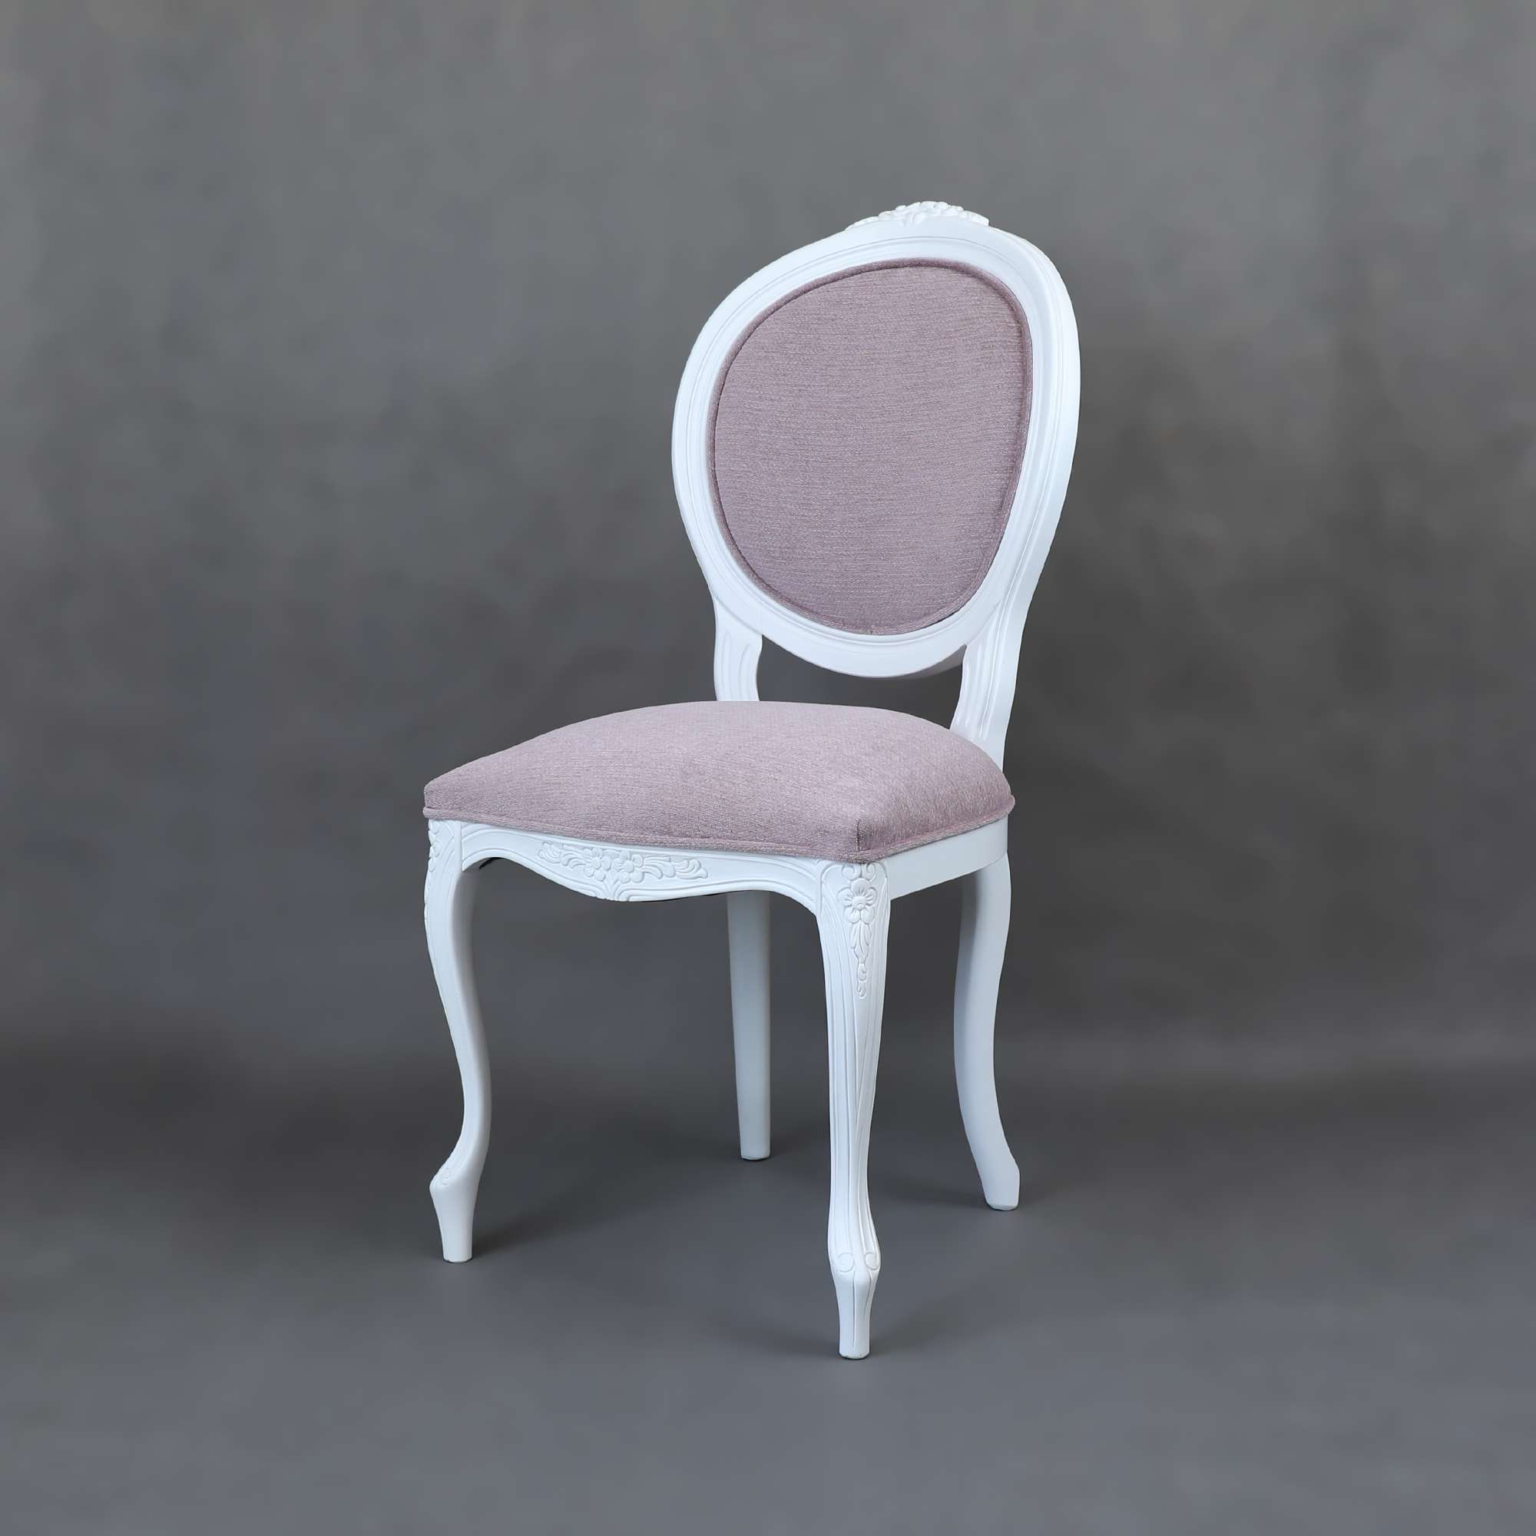 krzeslo stylowe ze zdobieniami